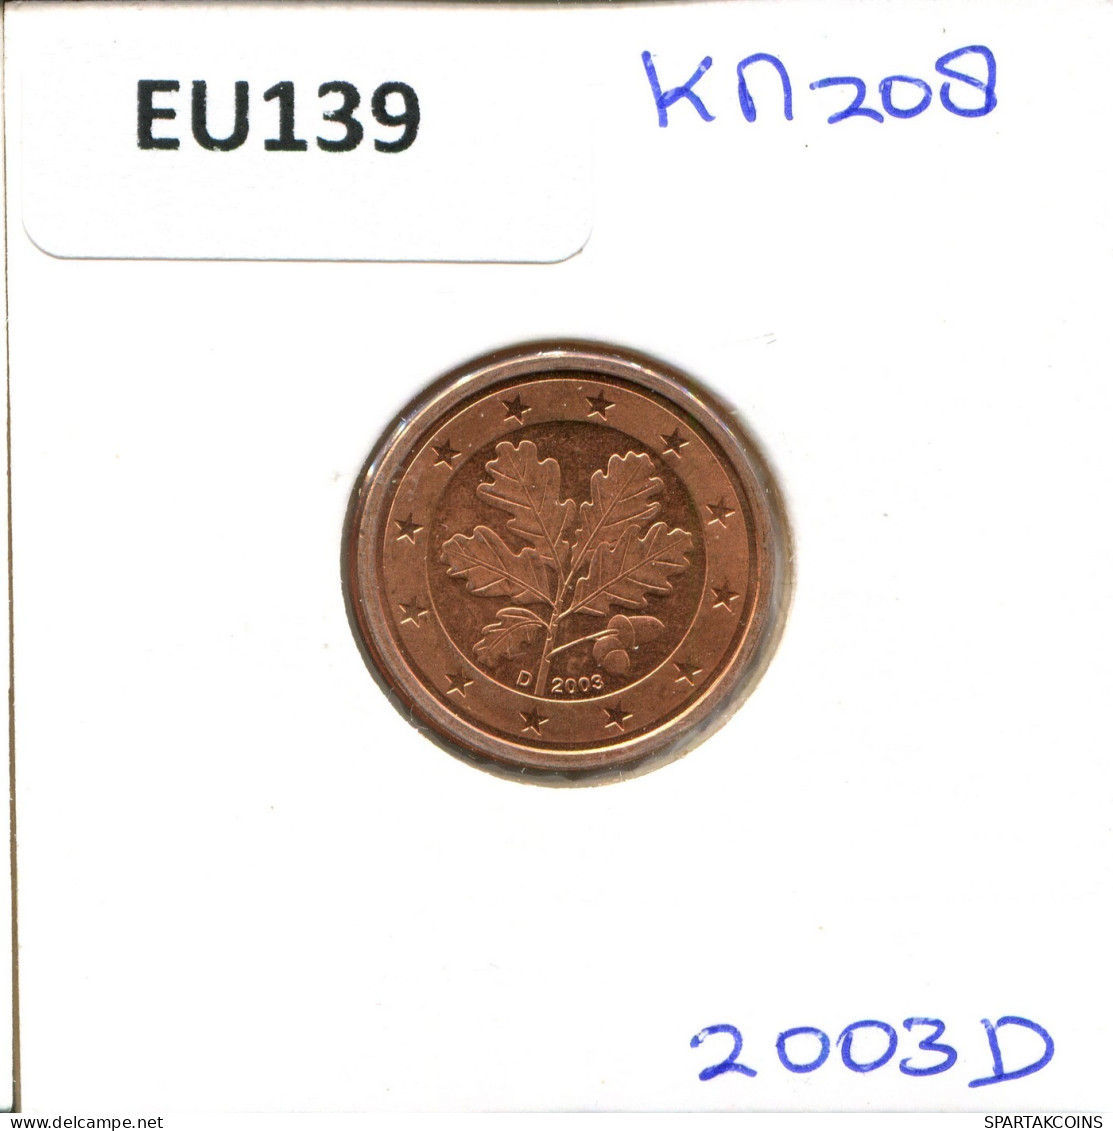 2 EURO CENTS 2003 DEUTSCHLAND Münze GERMANY #EU139.D.A - Germany